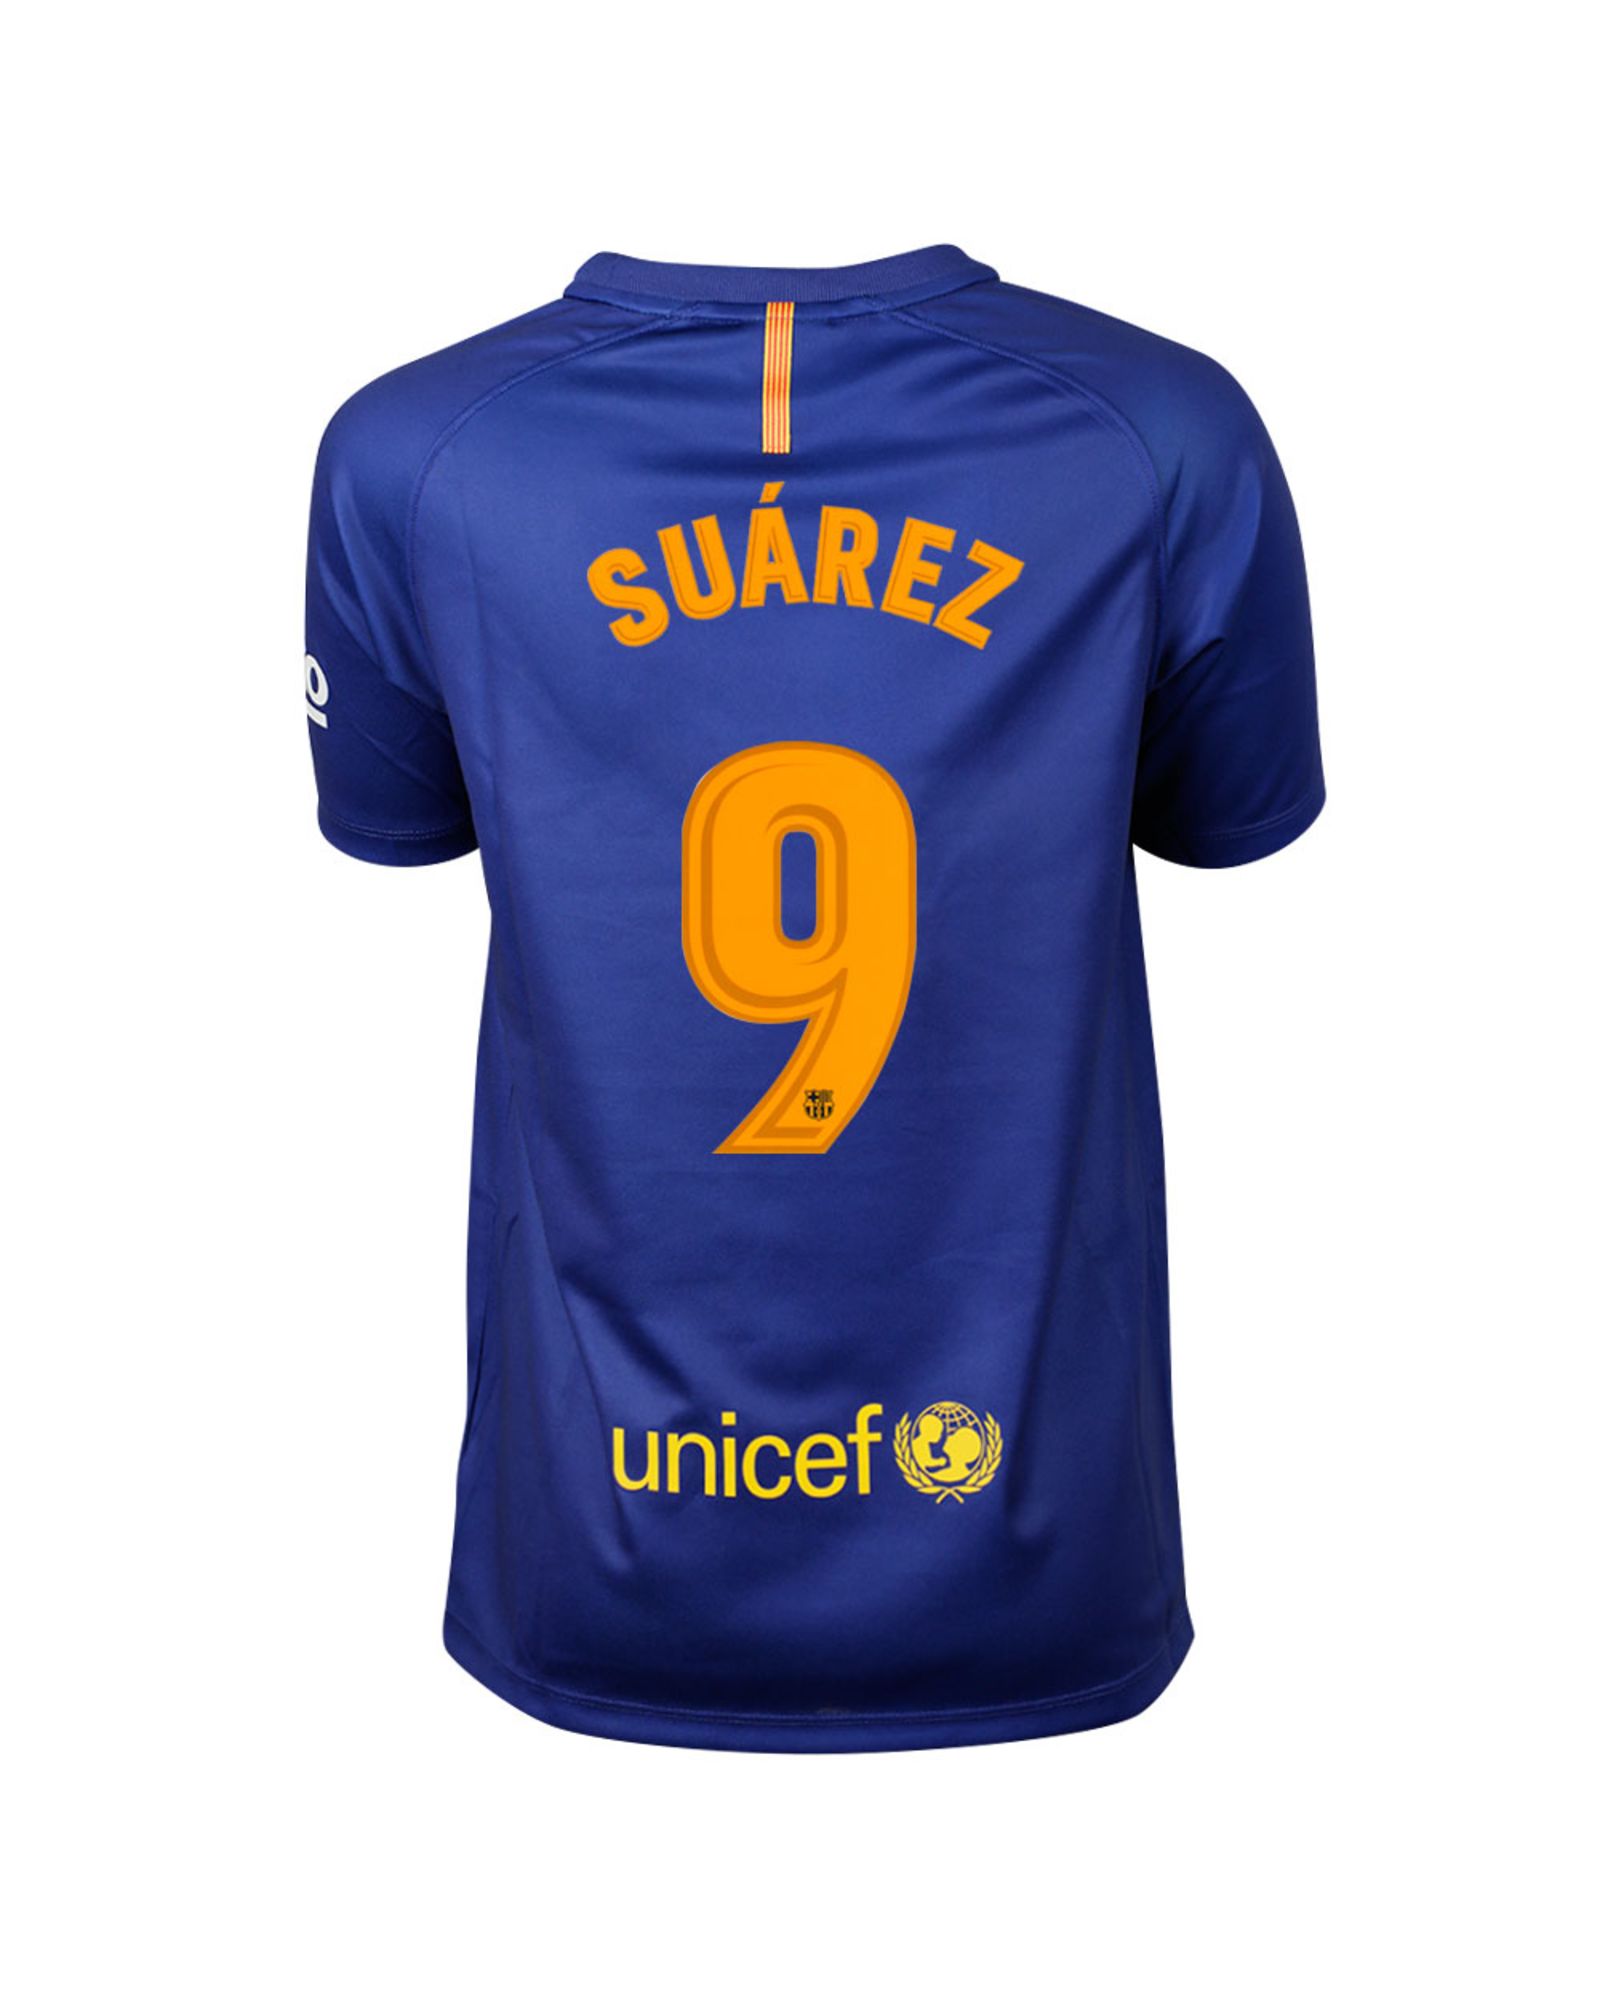 Camiseta 1ª FC Barcelona 2017/2018 Suárez Breathe Junior - Fútbol Factory